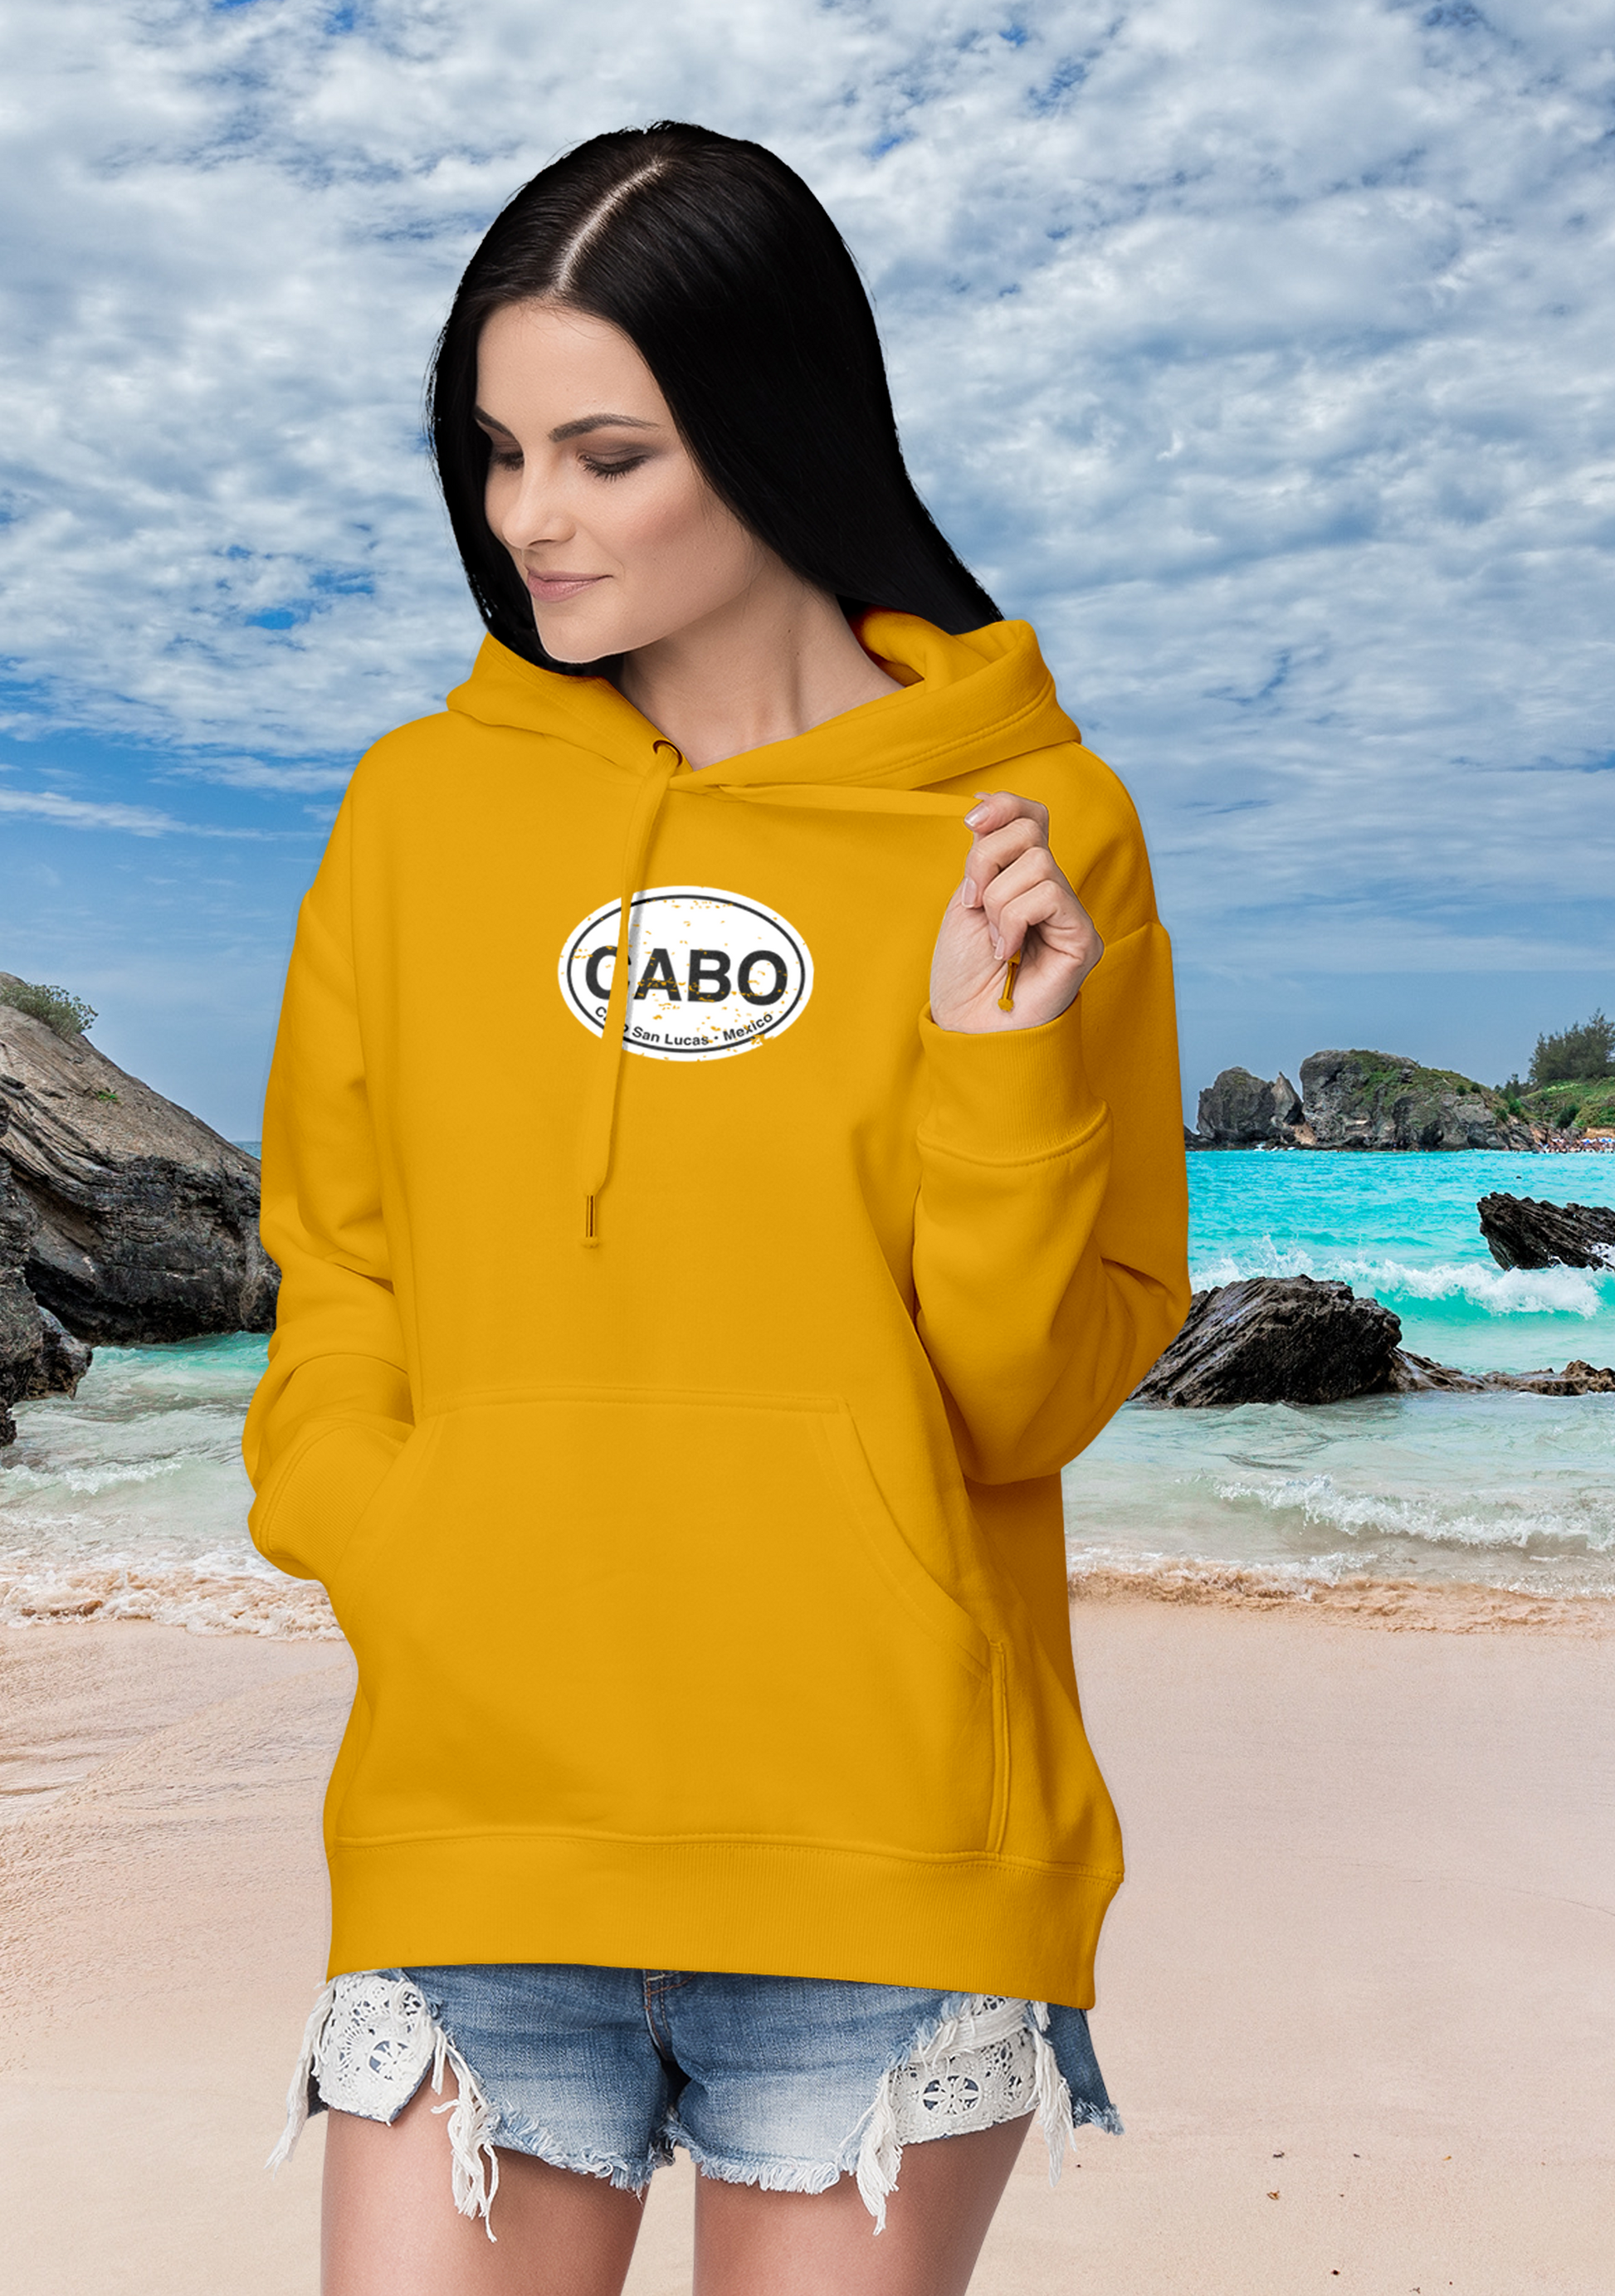 Cabo Men's & Women's Classic Adult Hoodie - My Destination Location